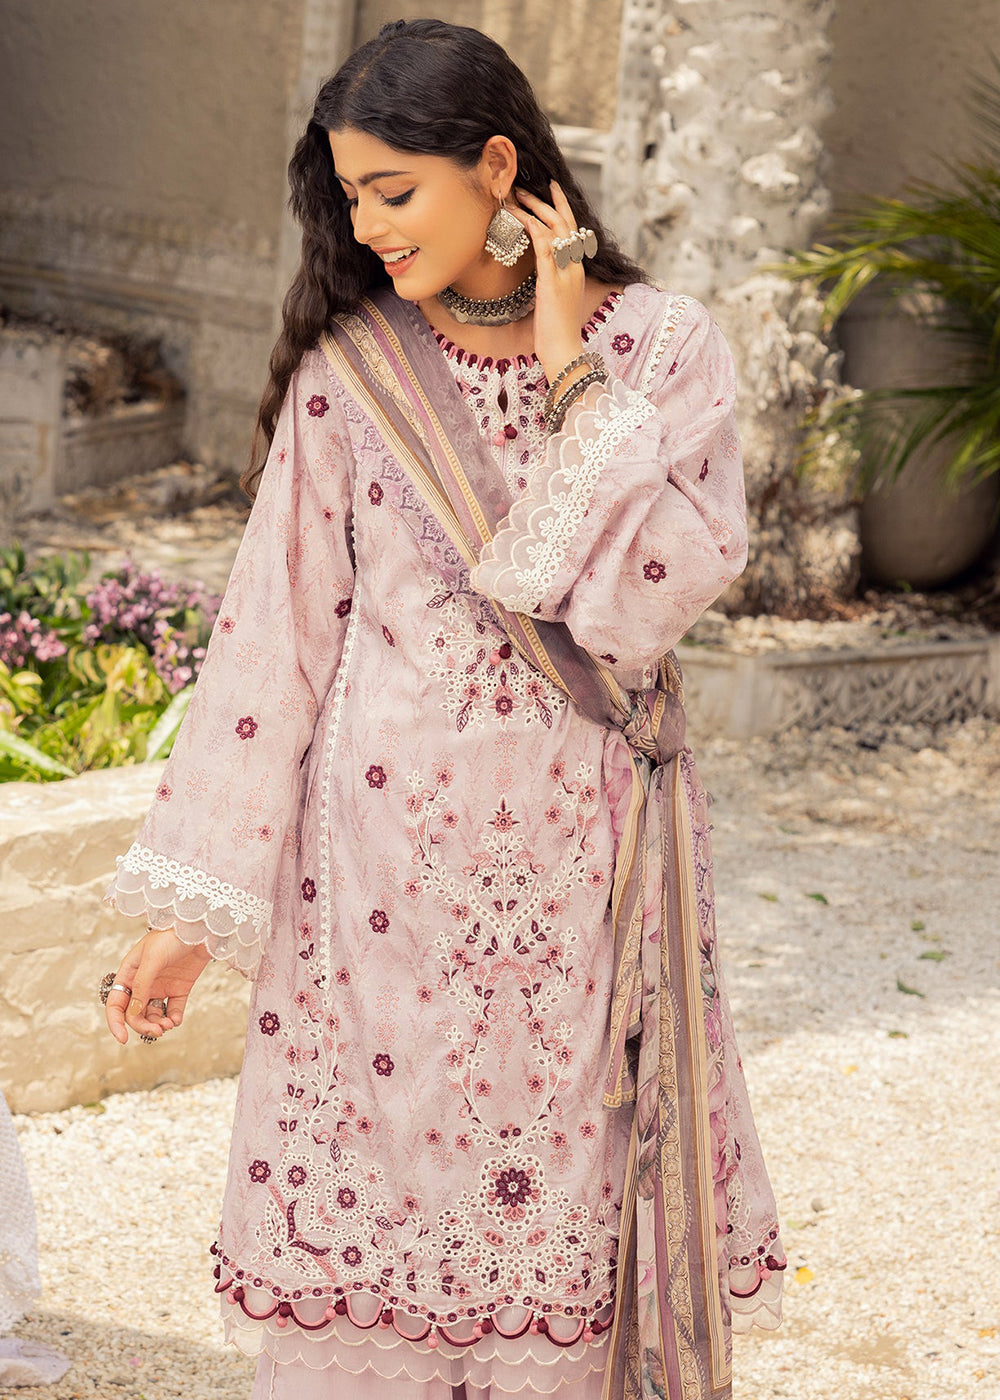 Buy Now Lilac Lawn Suit - Adan Libas - Dorian Eid Edit '23 - 5200-D4 Online in USA, UK, Canada & Worldwide at Empress Clothing. 